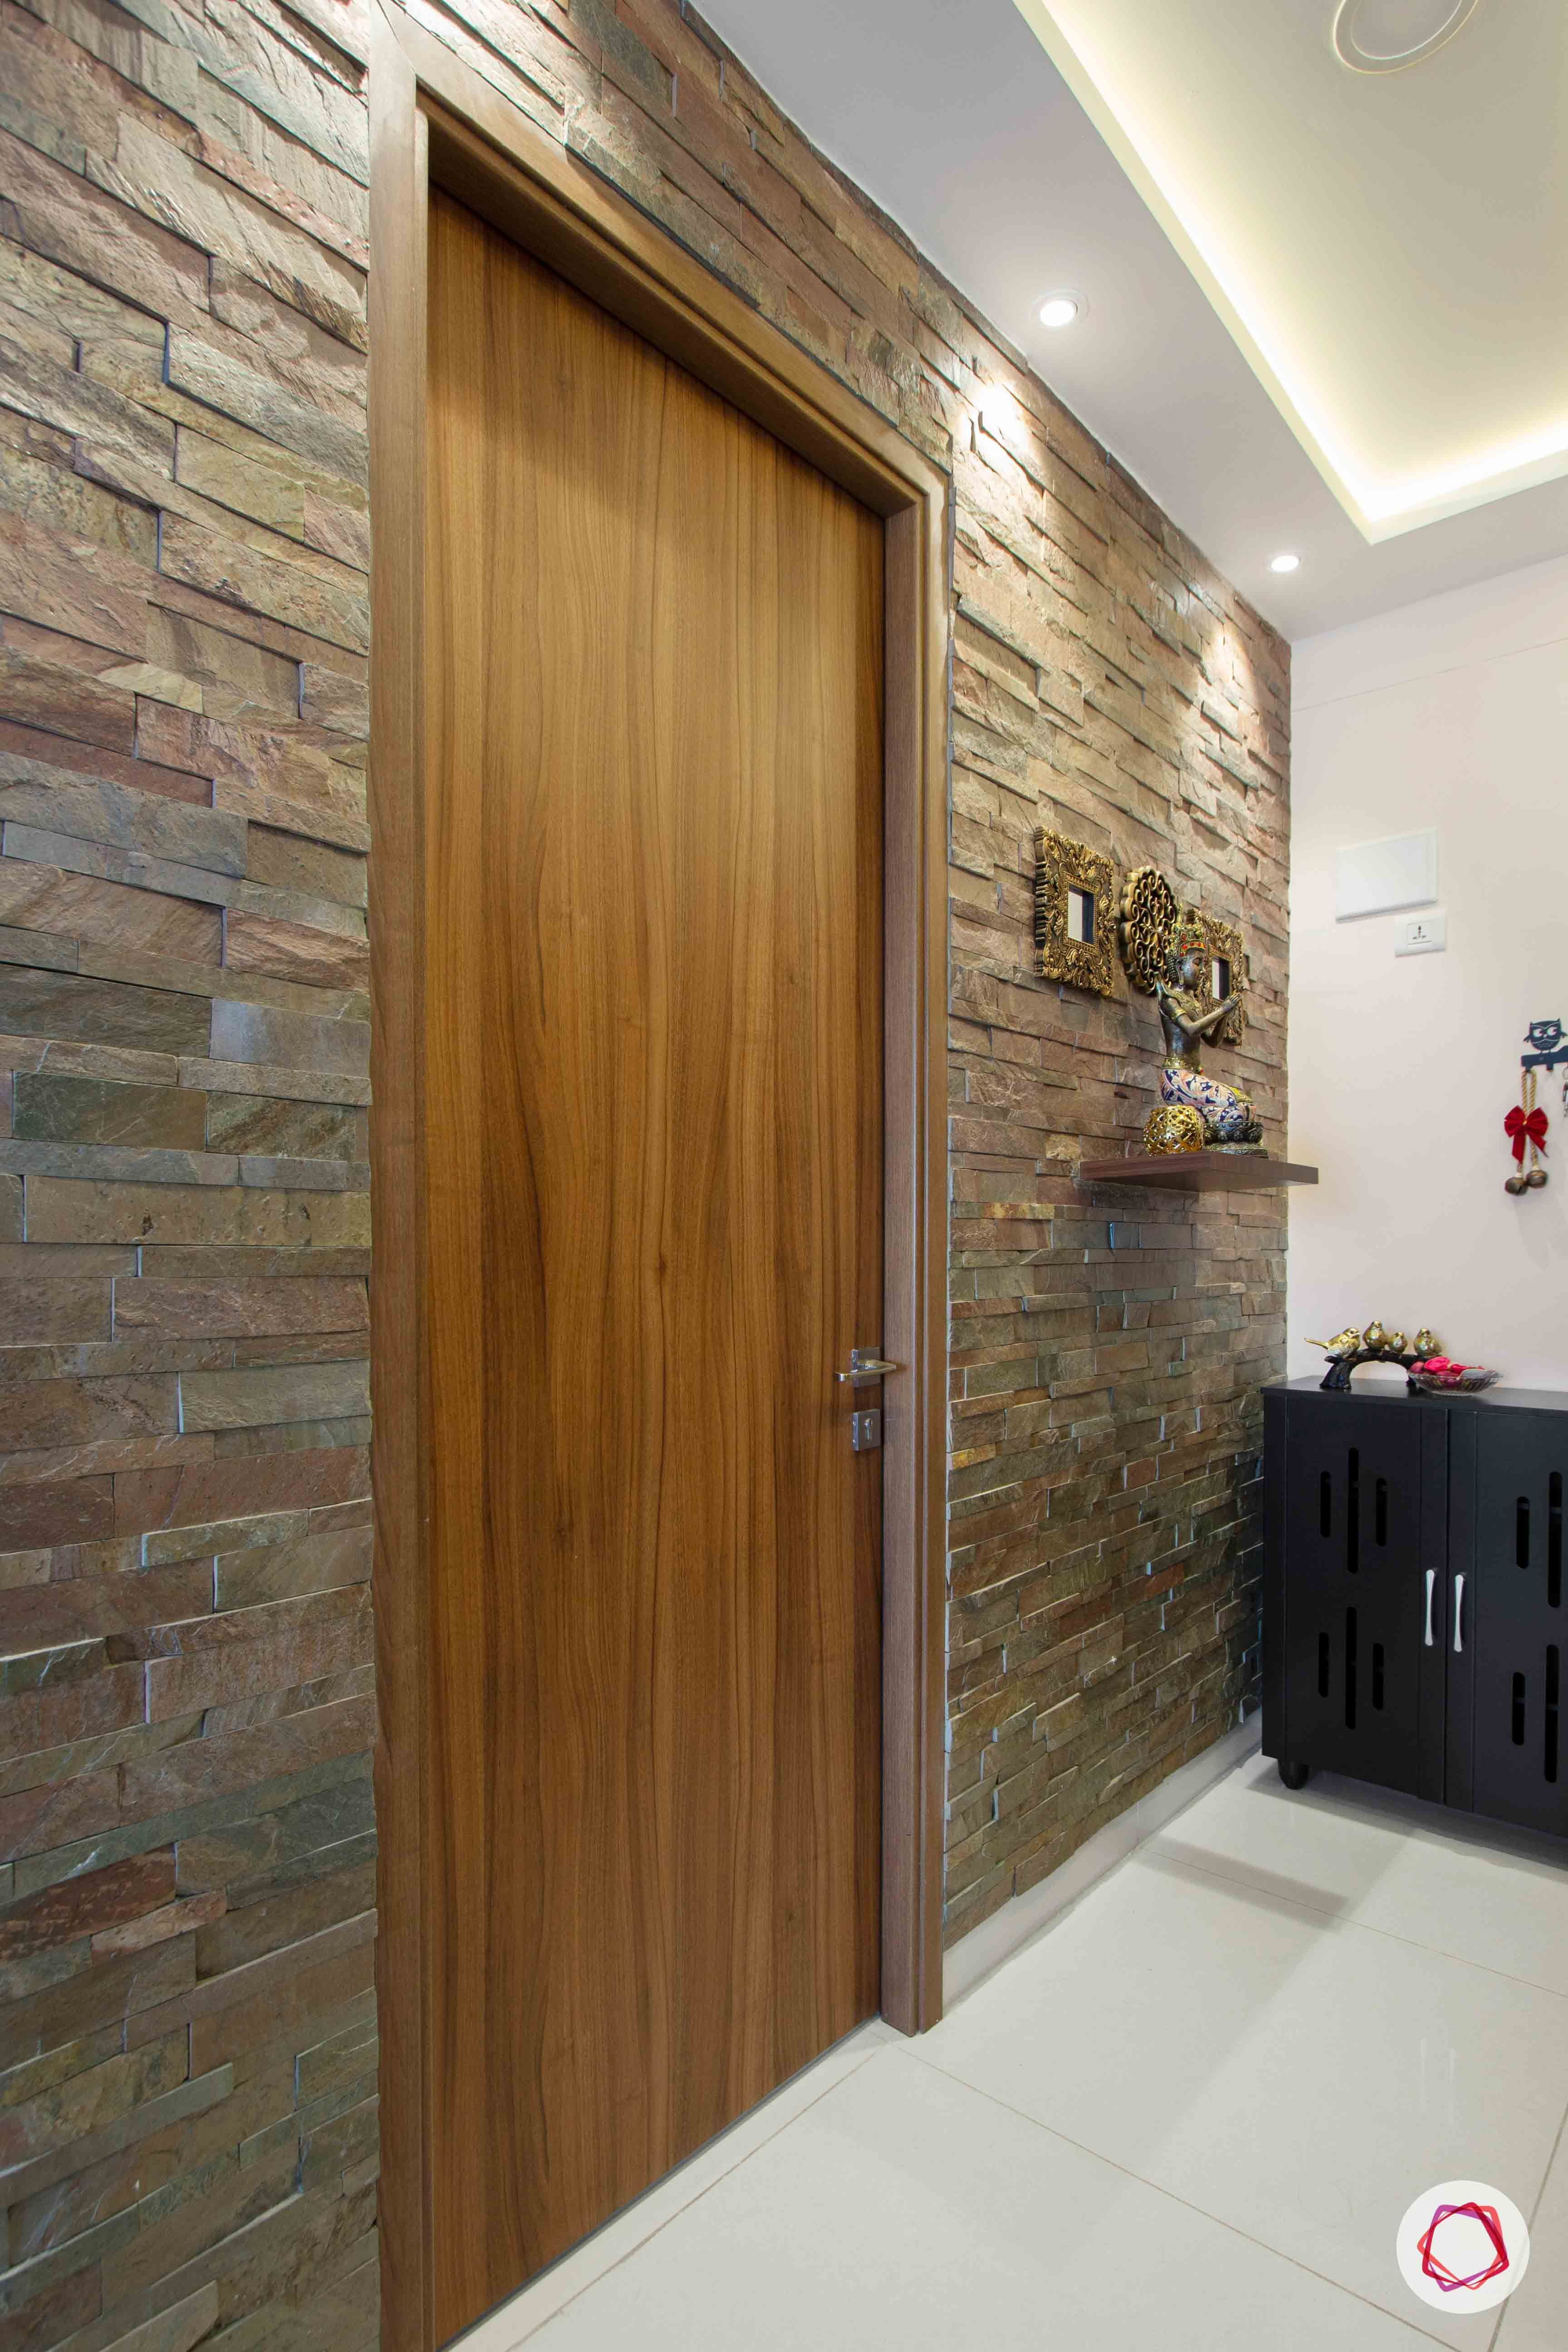 snn raj greenbay-entryway-stone cladding wall-wooden door